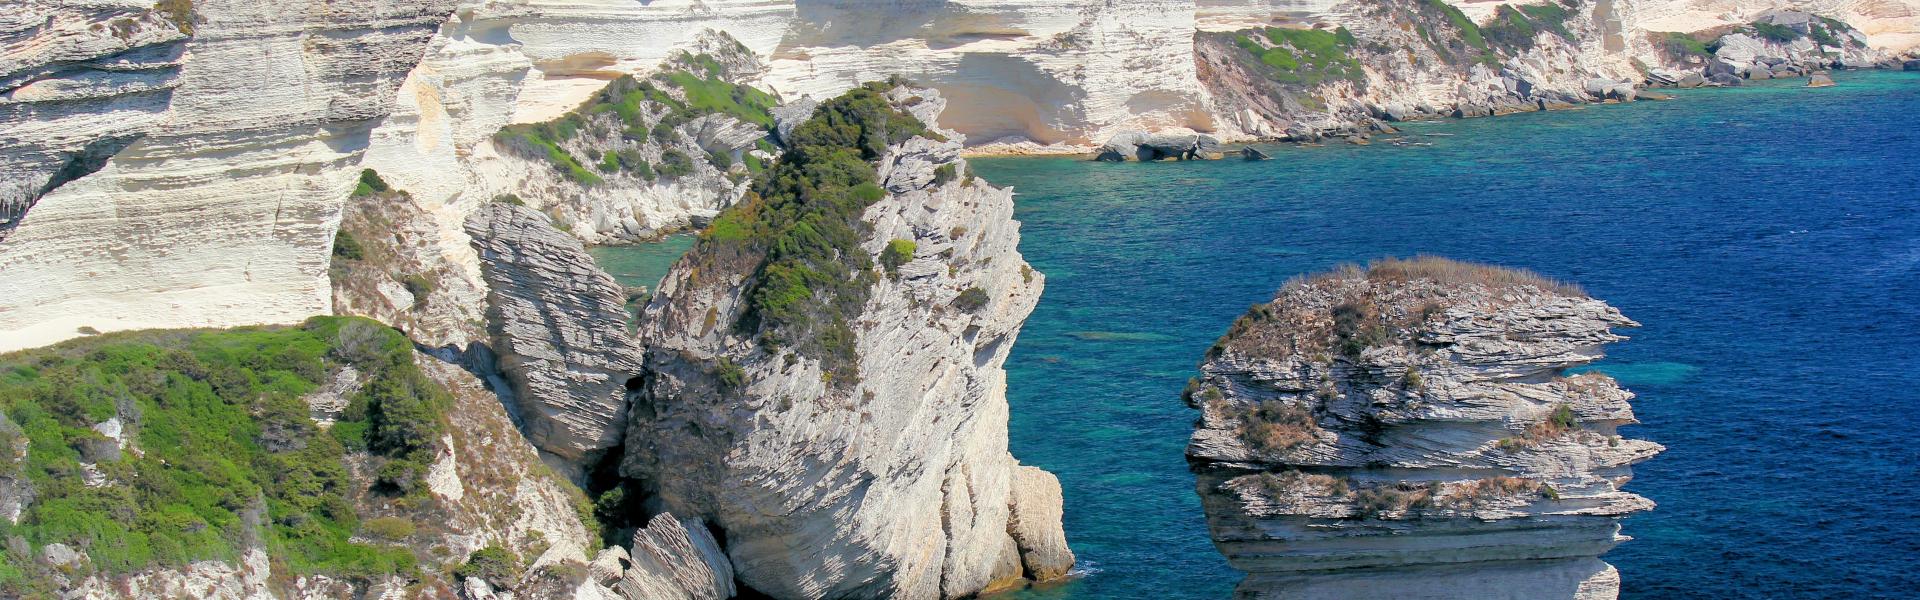 Location de vacances à Lumio - Haute-Corse - amivac